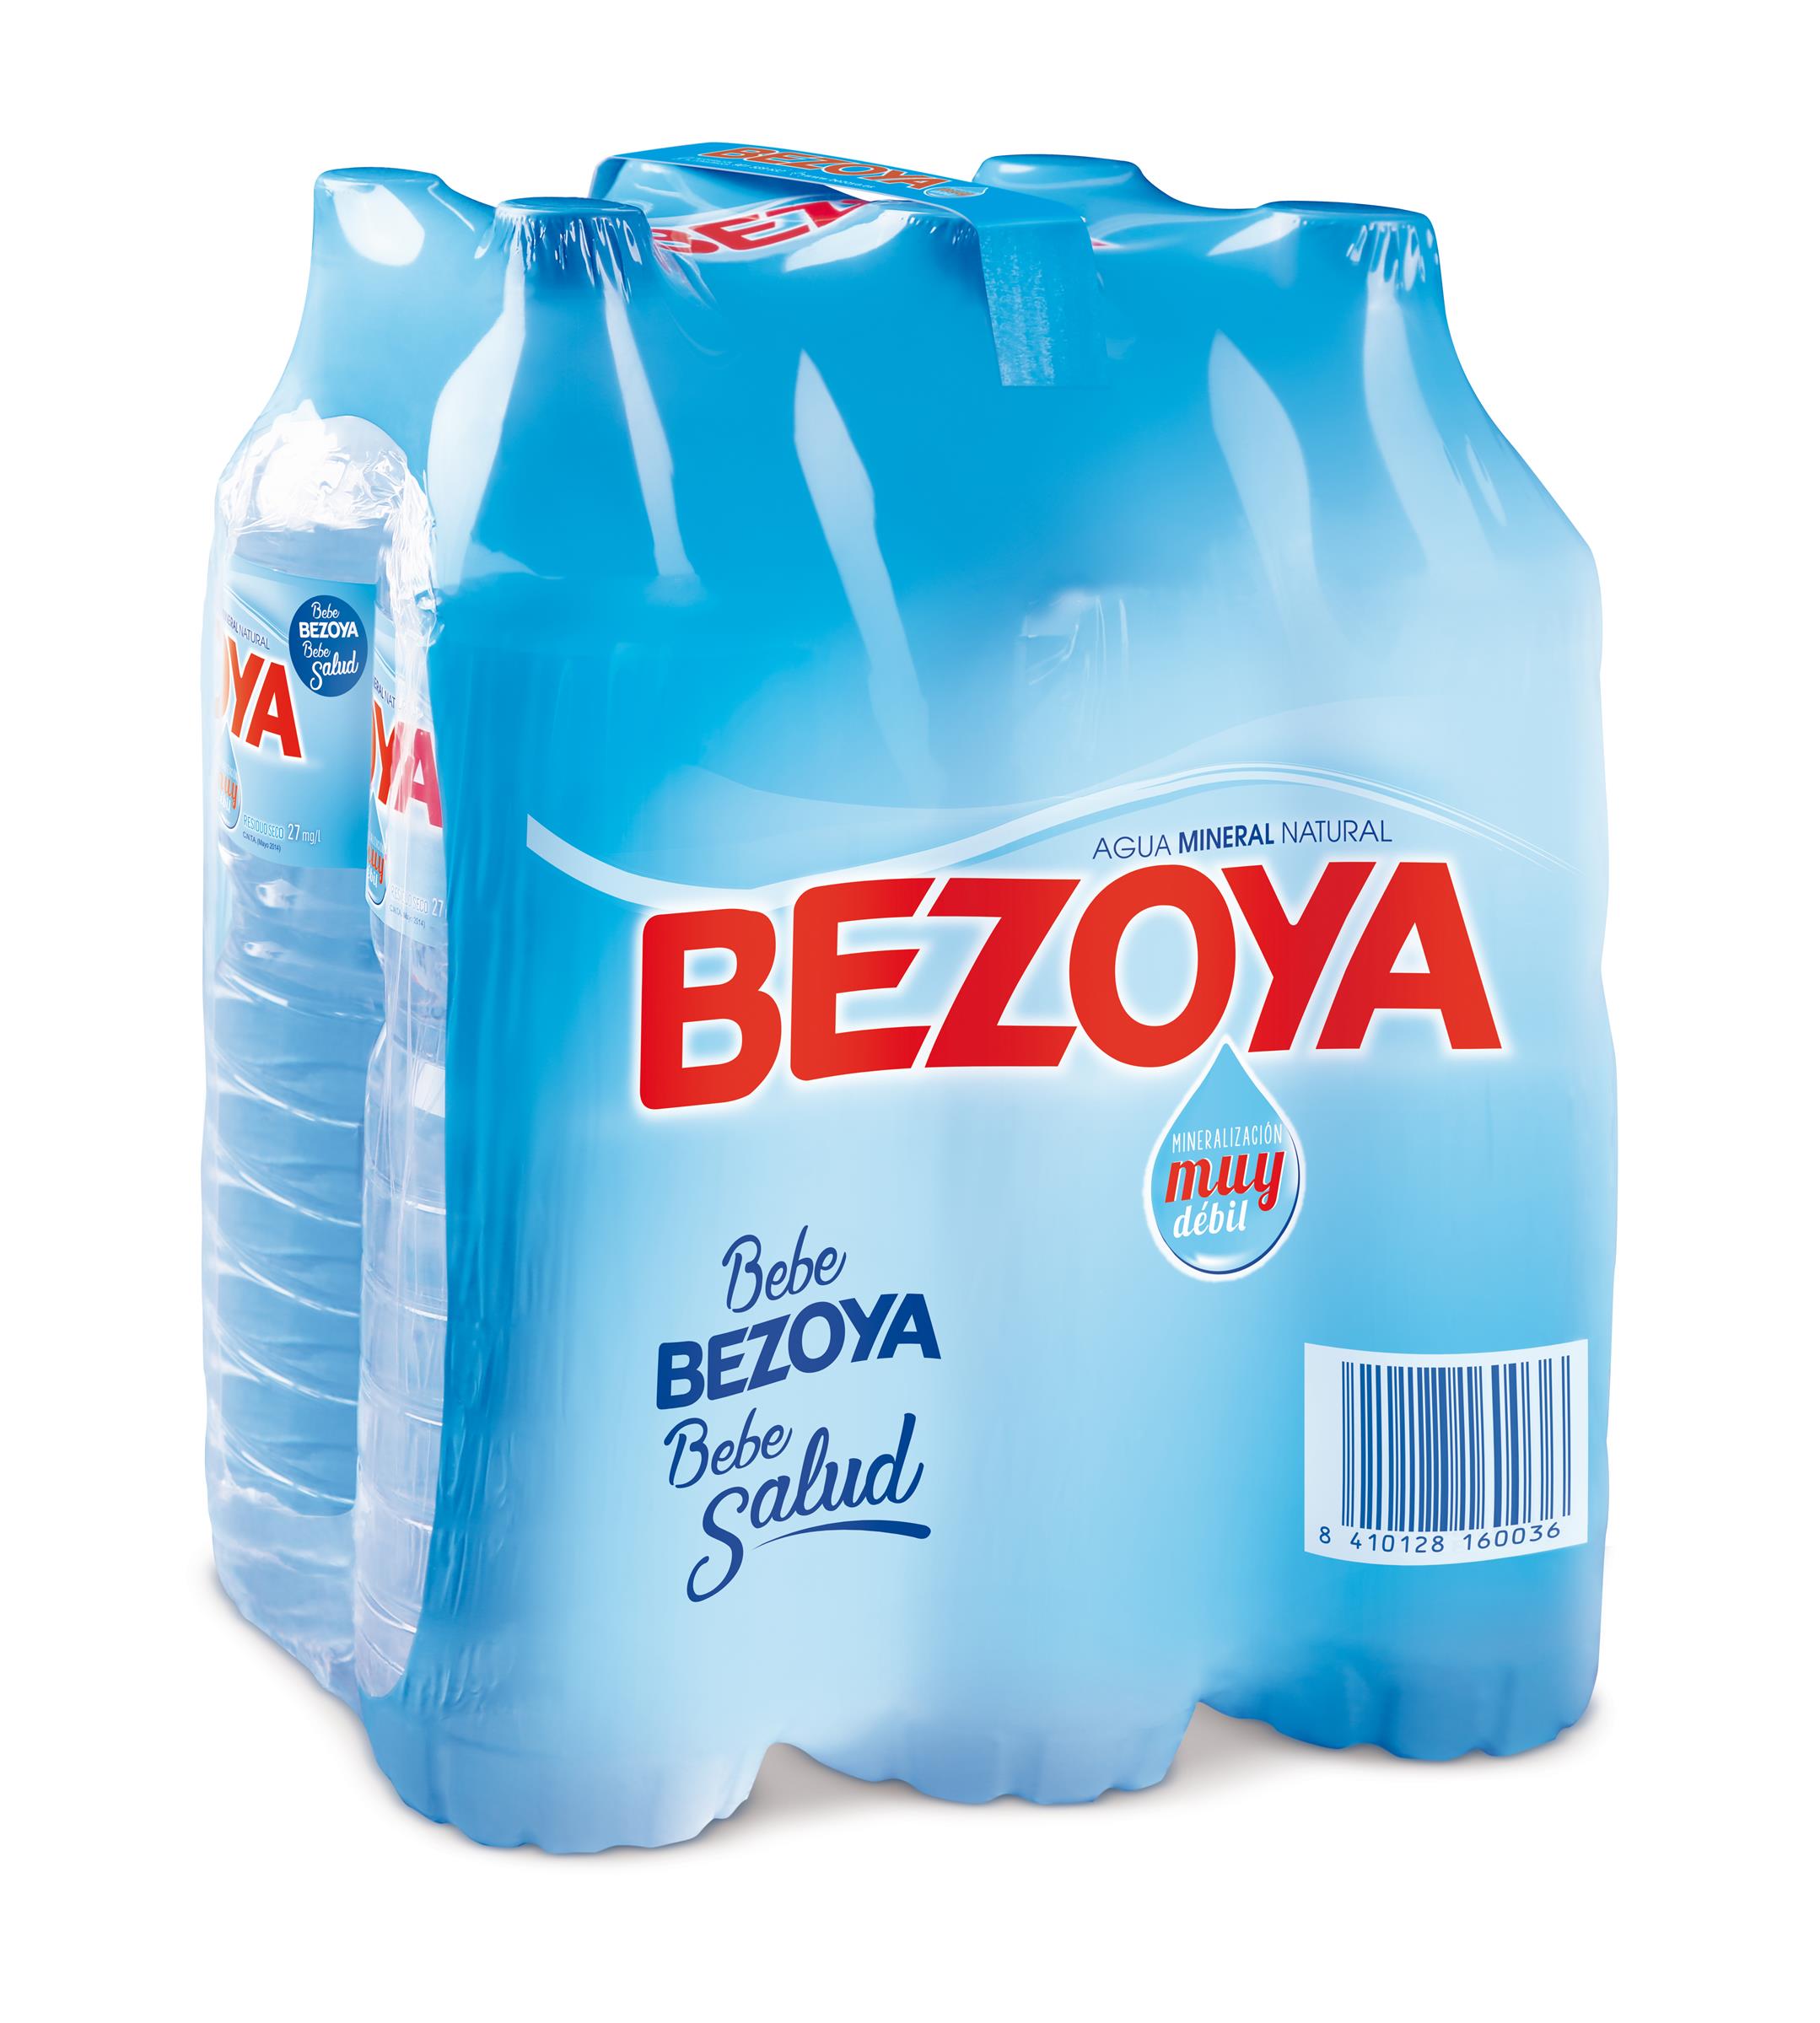 mineral natural BEZOYA 6 unidades BOTELLA 1.5 LT Supermercados DIA